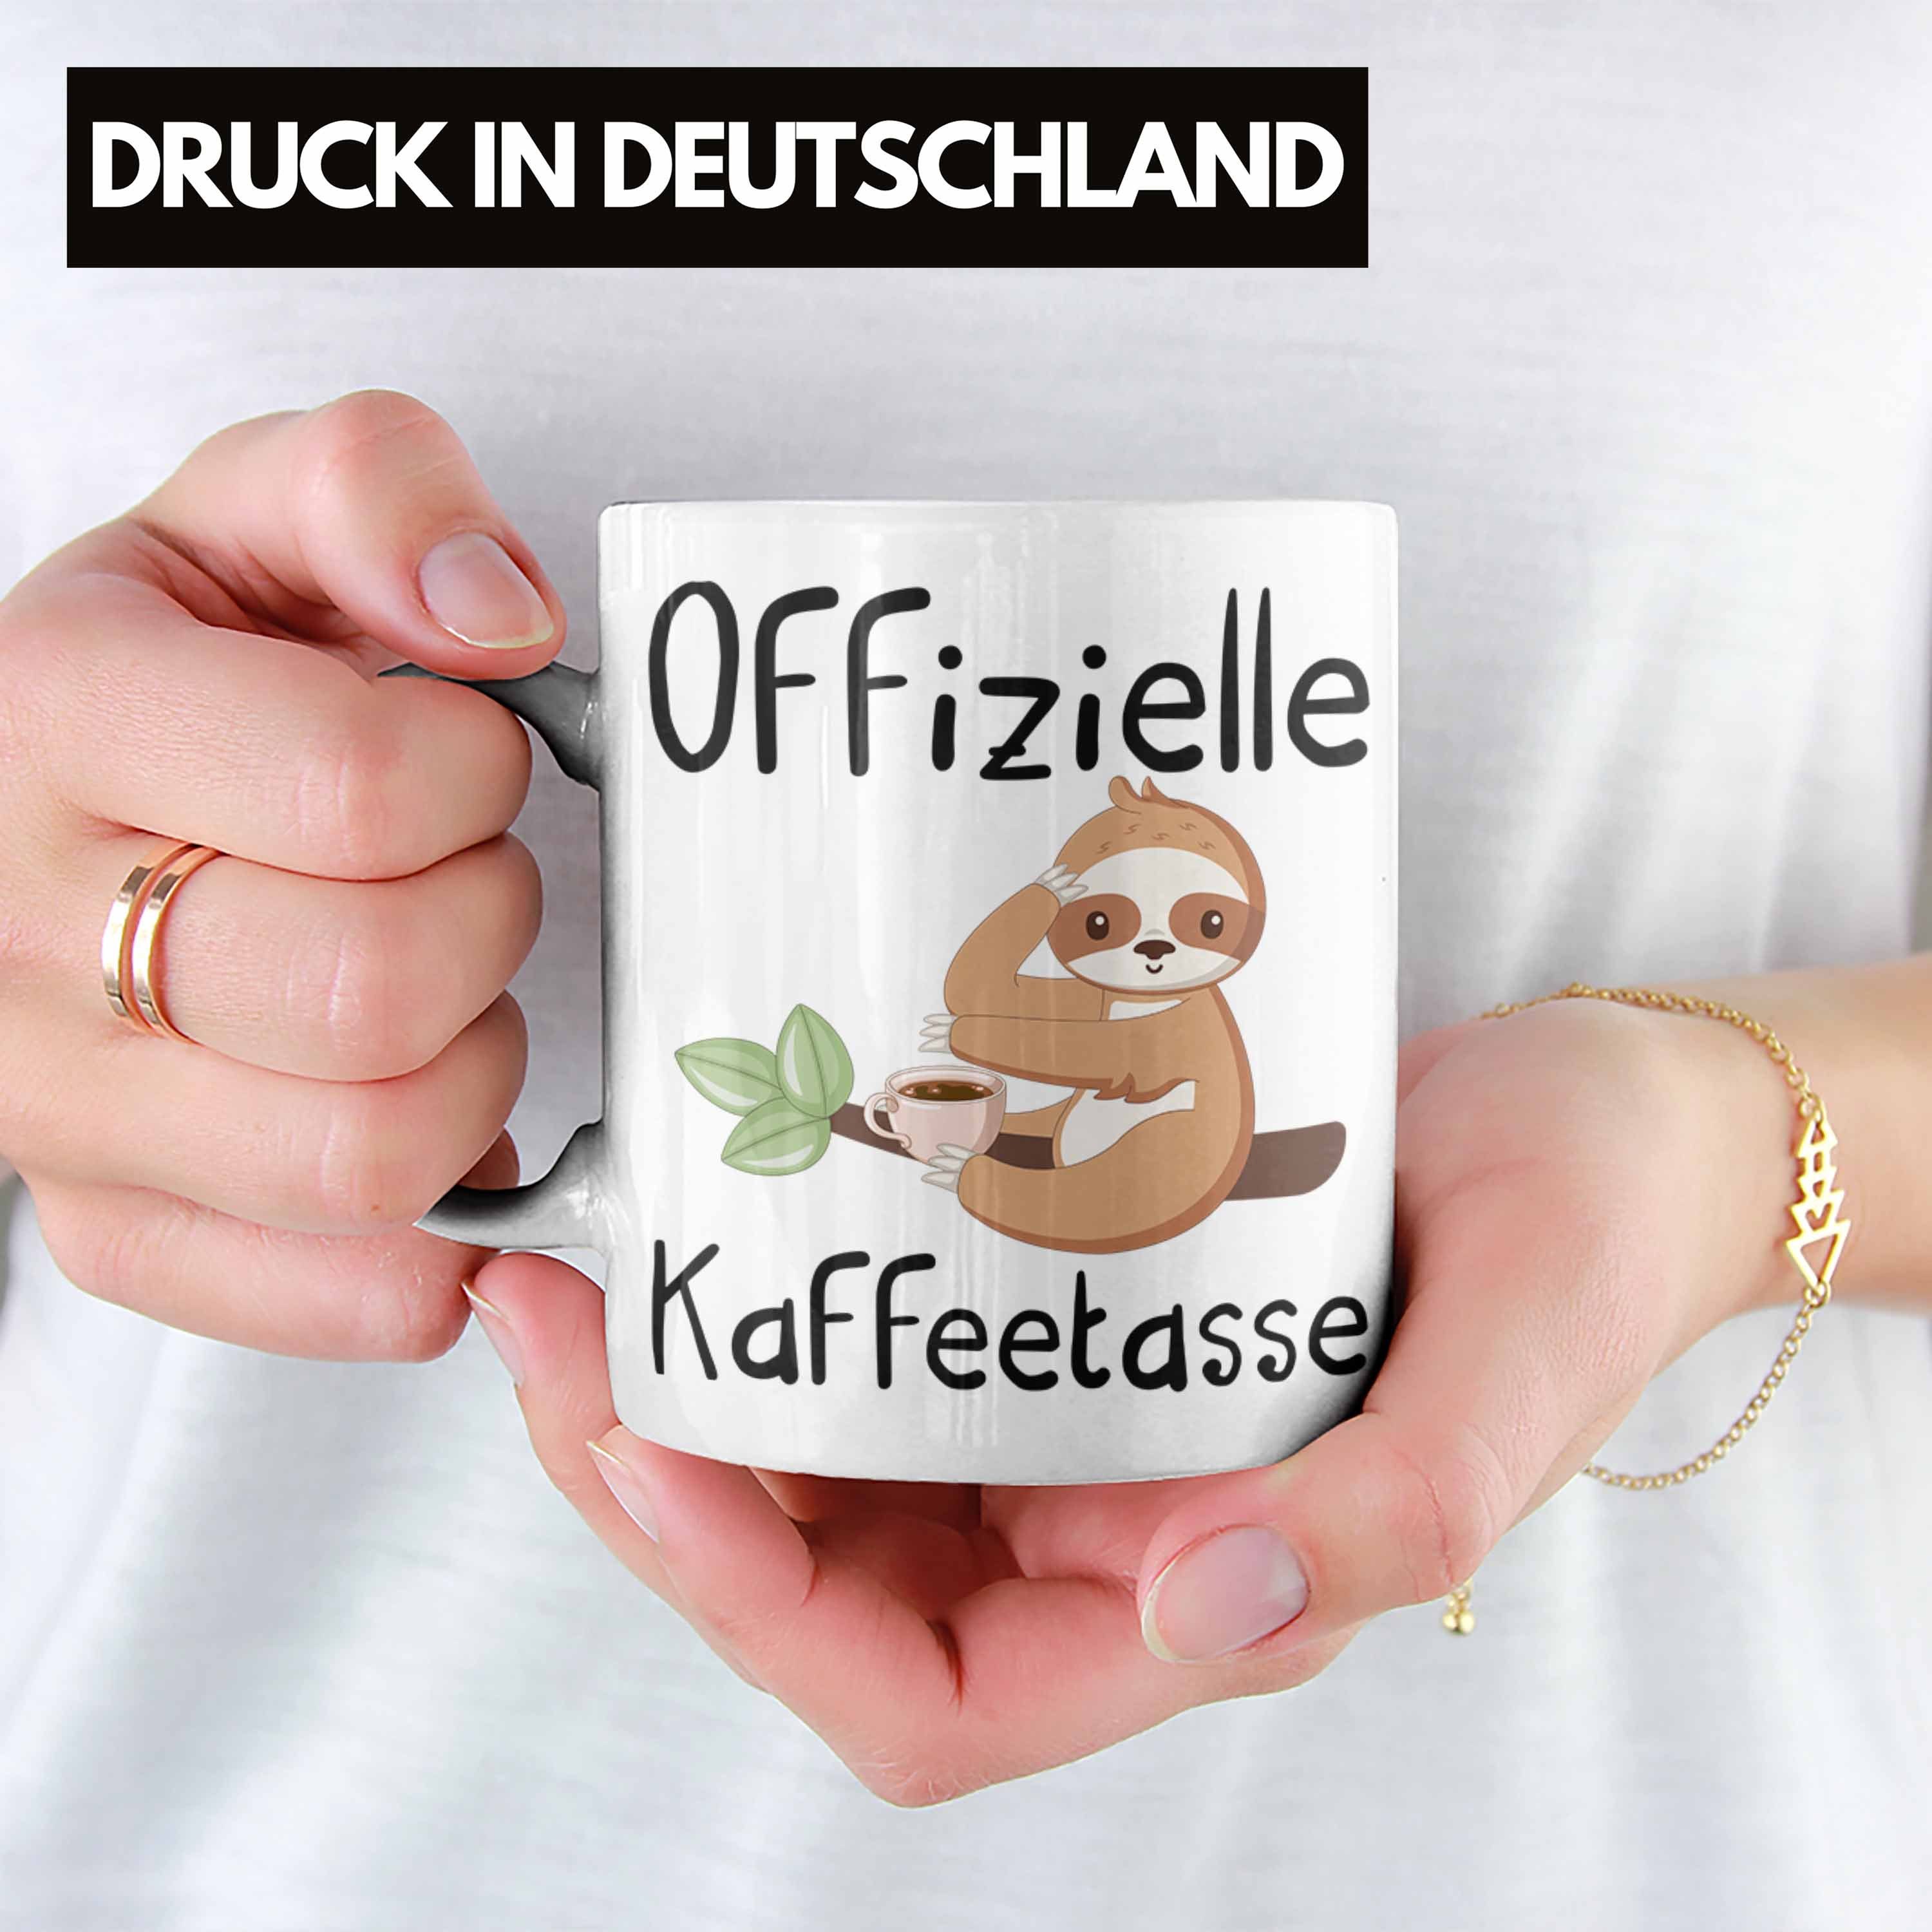 Weiss Kaffeetrinker Geschenk Tasse Trendation Kaffeetasse Geschenkidee Offizielle Kaffee-Tass